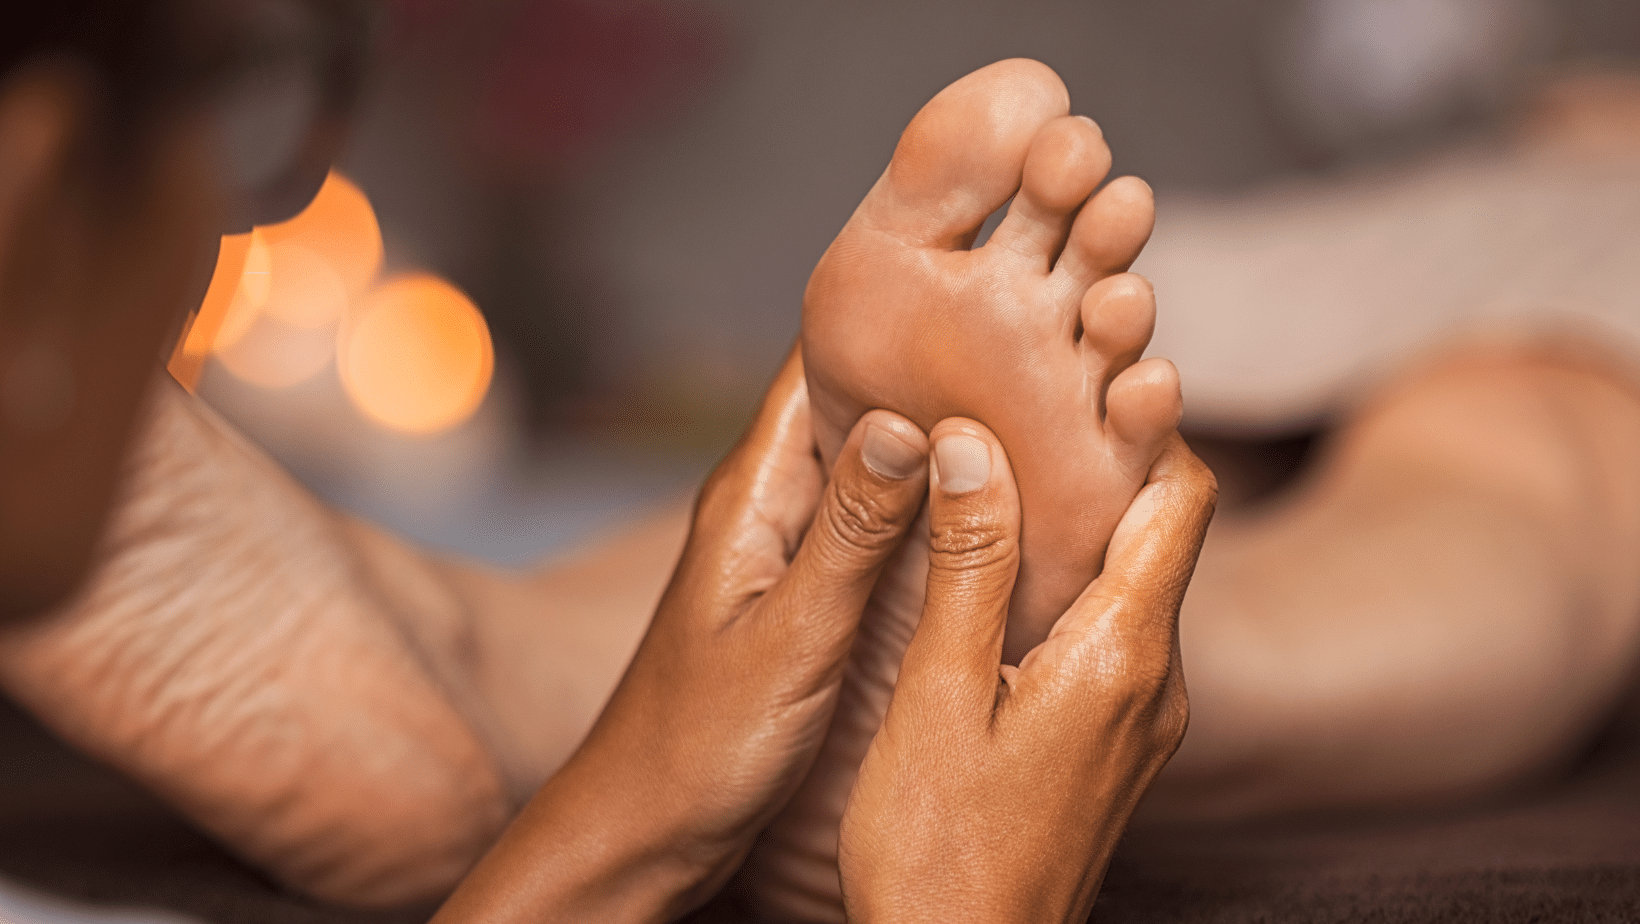 Foot Fetish Statistics – How Common is it?